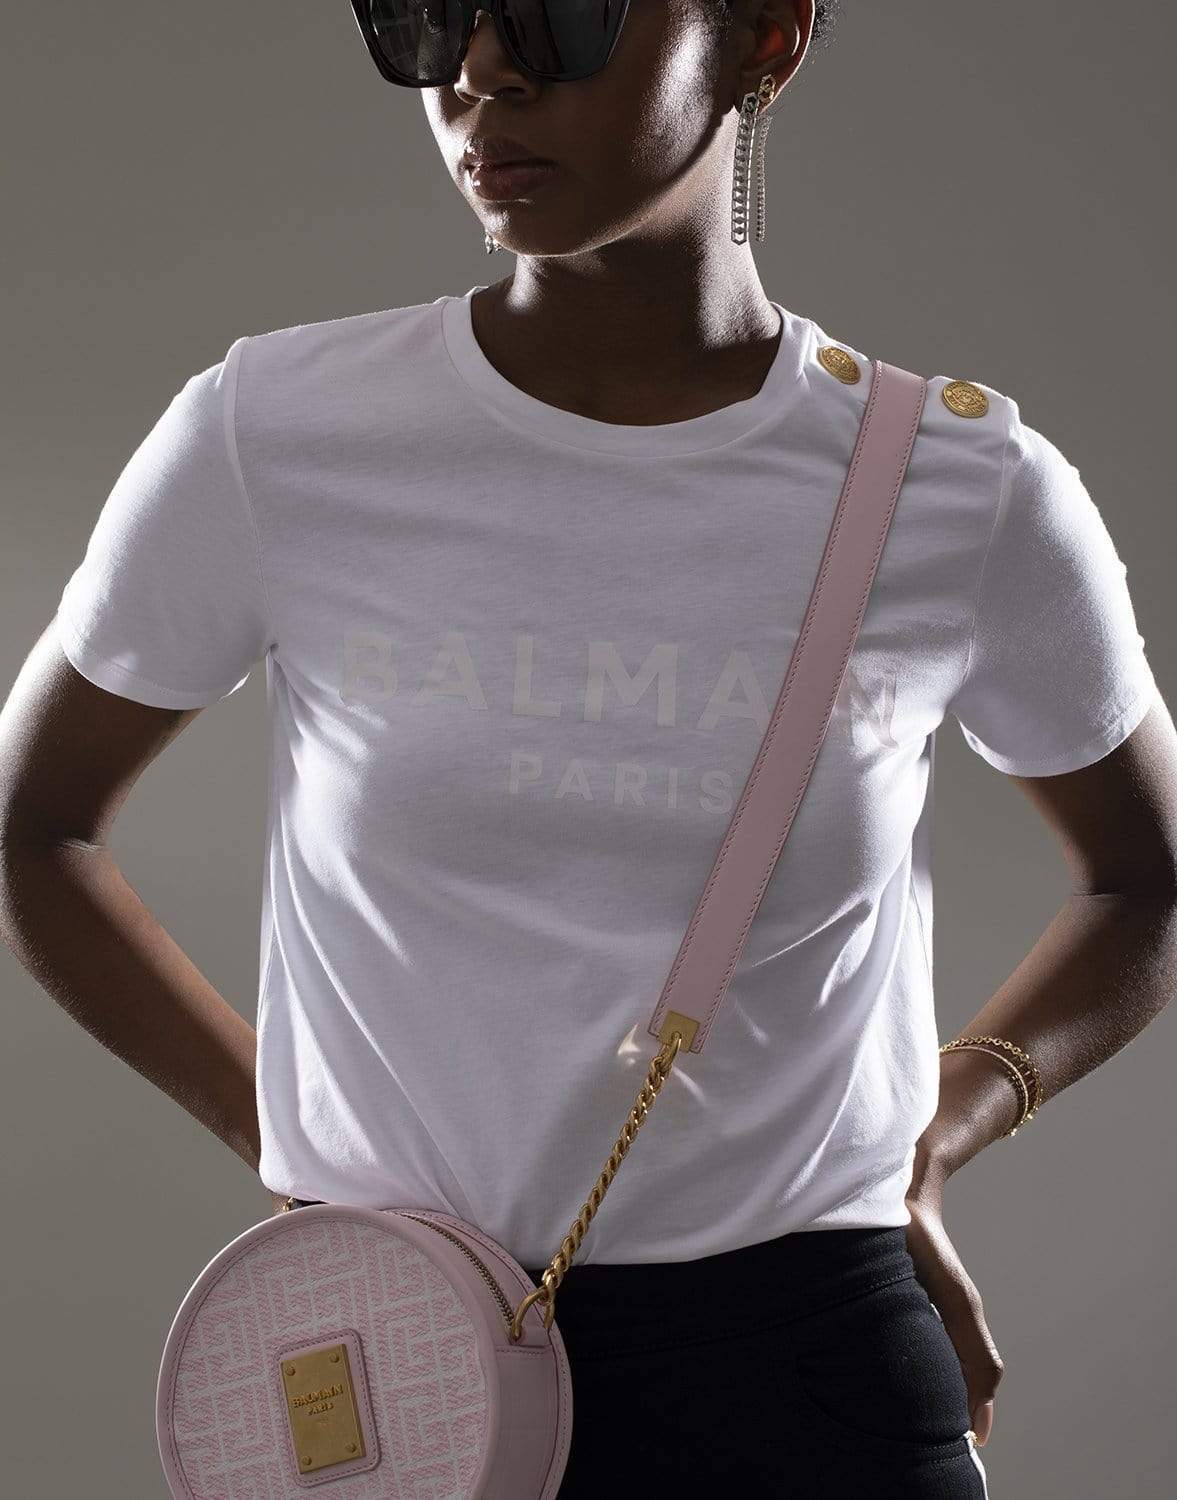 BALMAIN-White and Pale Rose Balmain Logo T-Shirt-